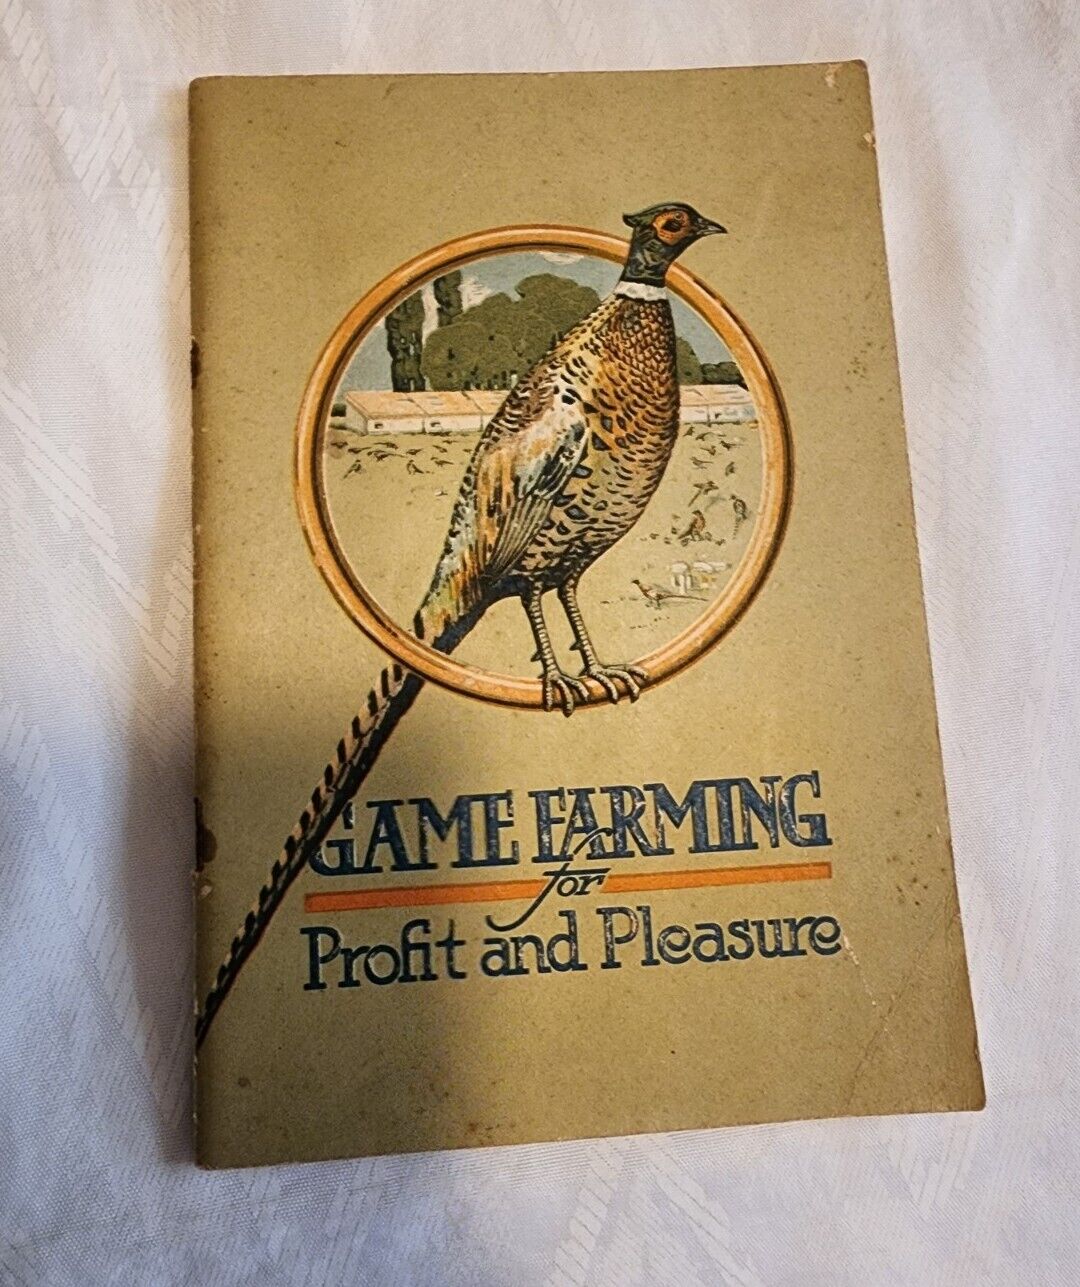 Vtg Ephemera Hercules Powder Company Game Farming For Profit and Pleasure 1915